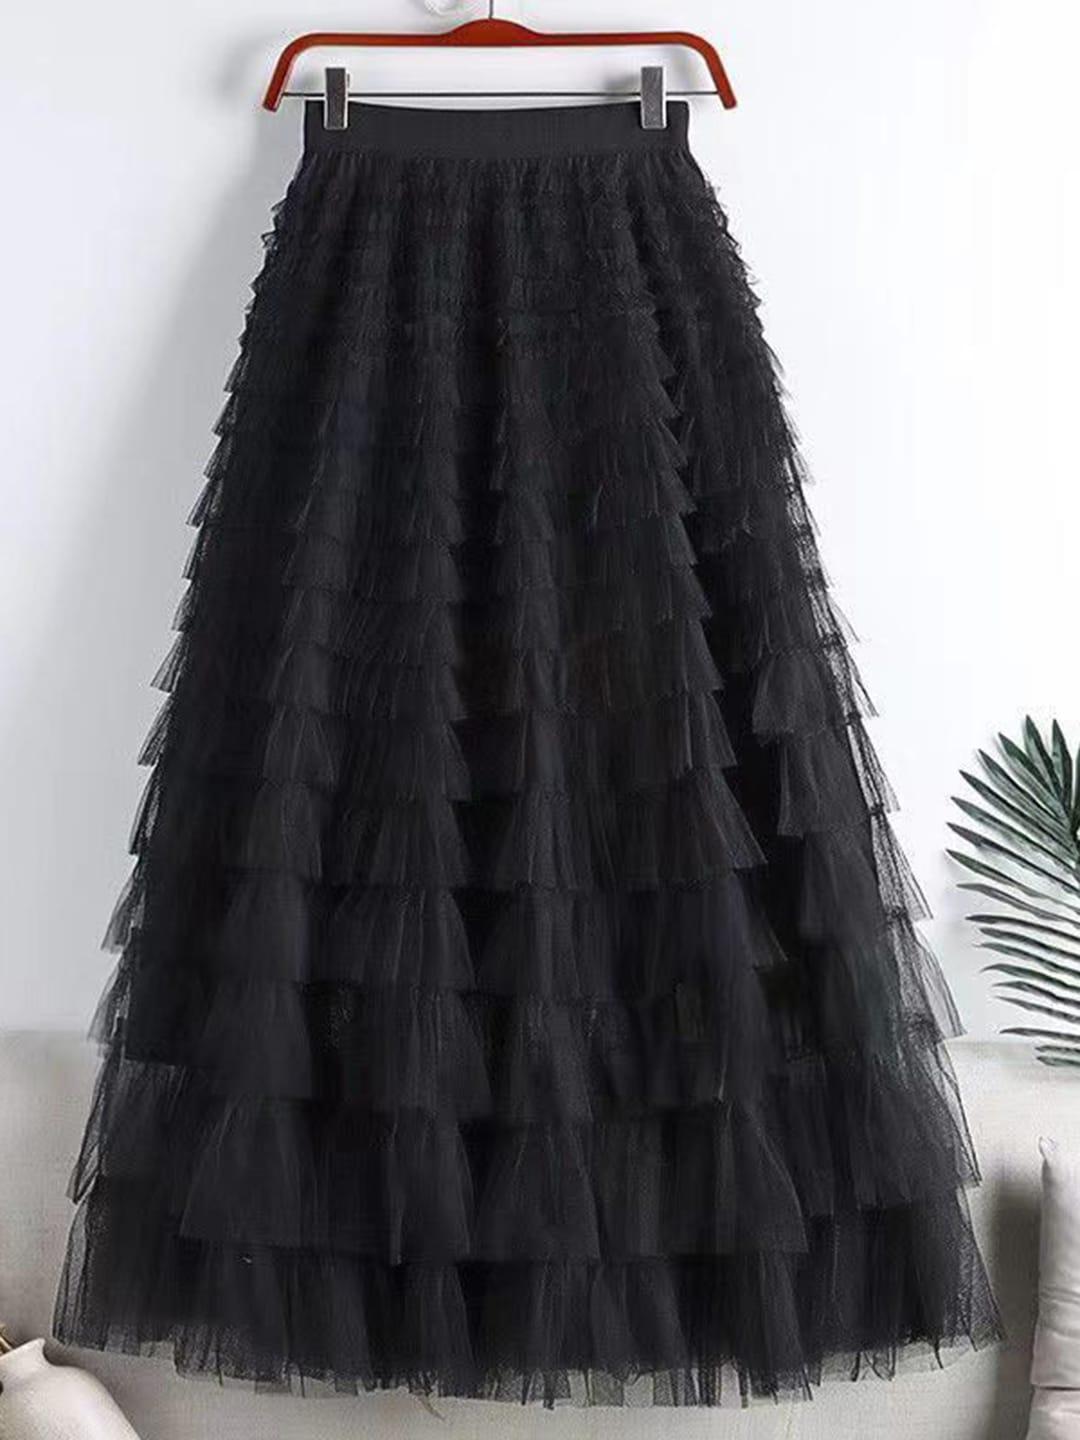 stylecast black frills bows and ruffles flared maxi skirt